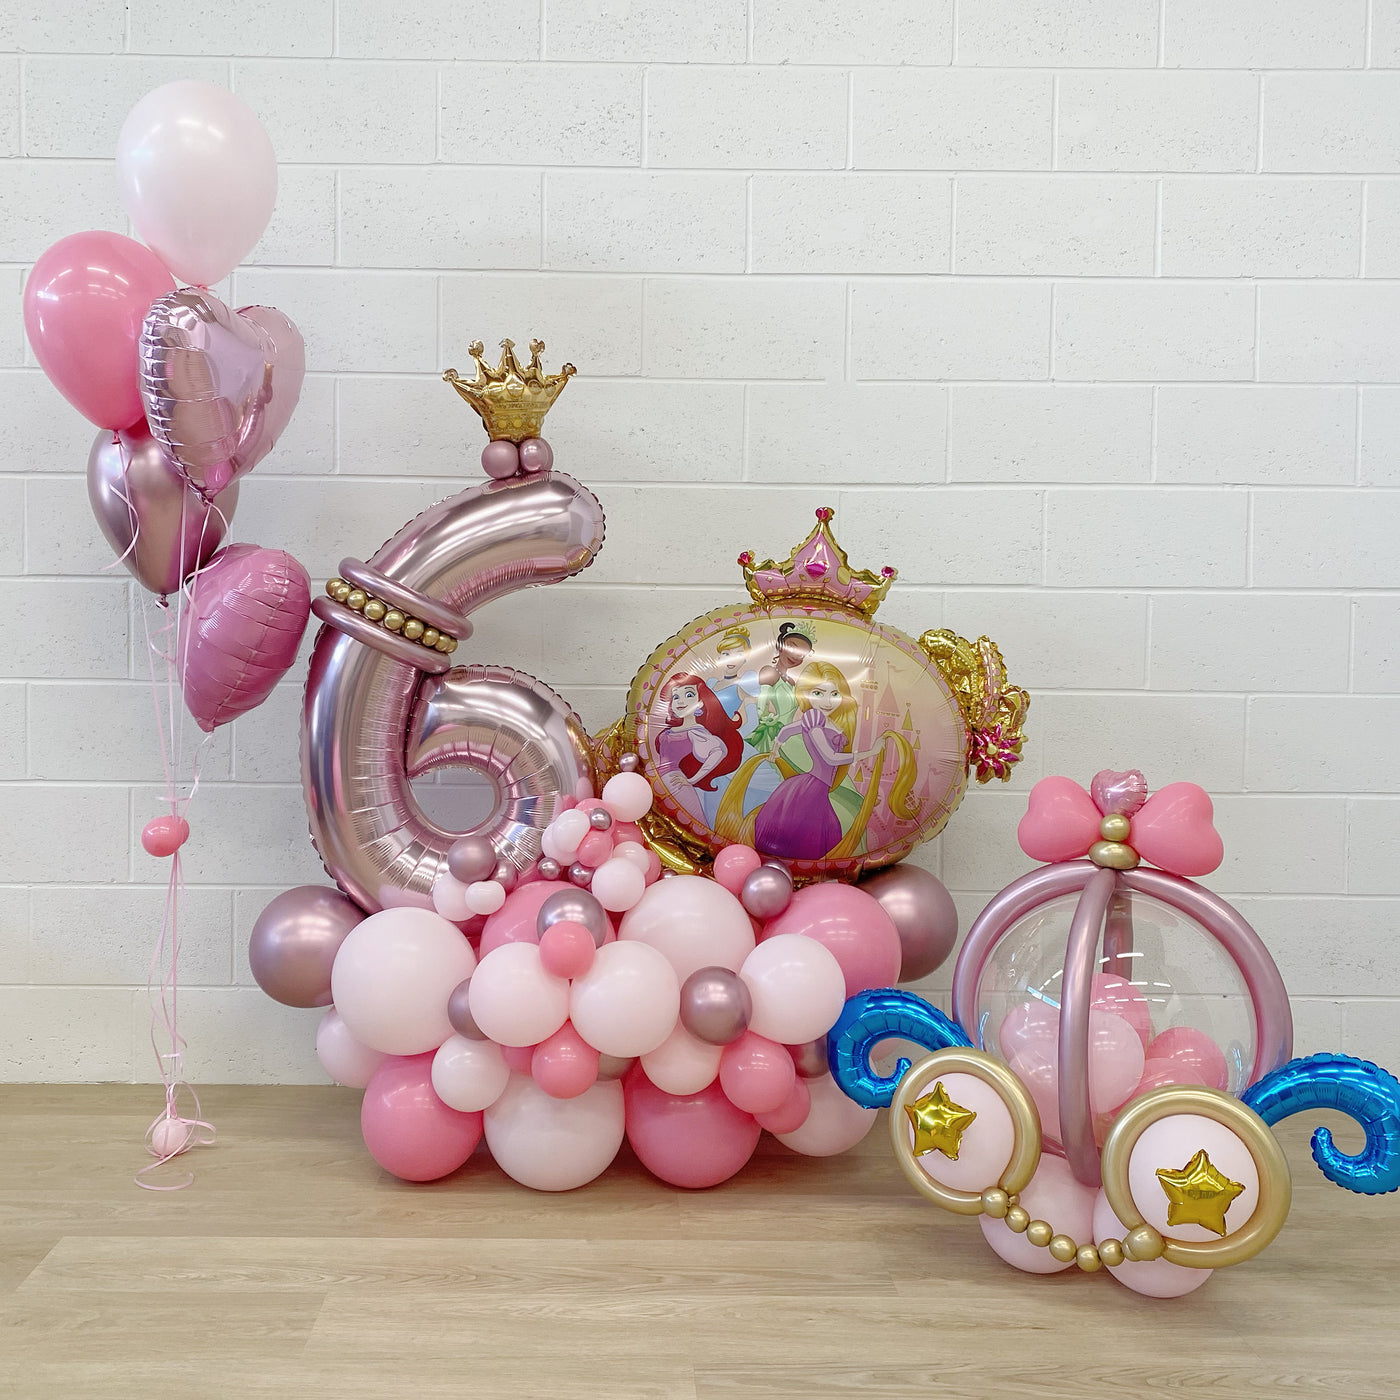 Disney Princess Themed Arrangement With Number and Helium Bundles